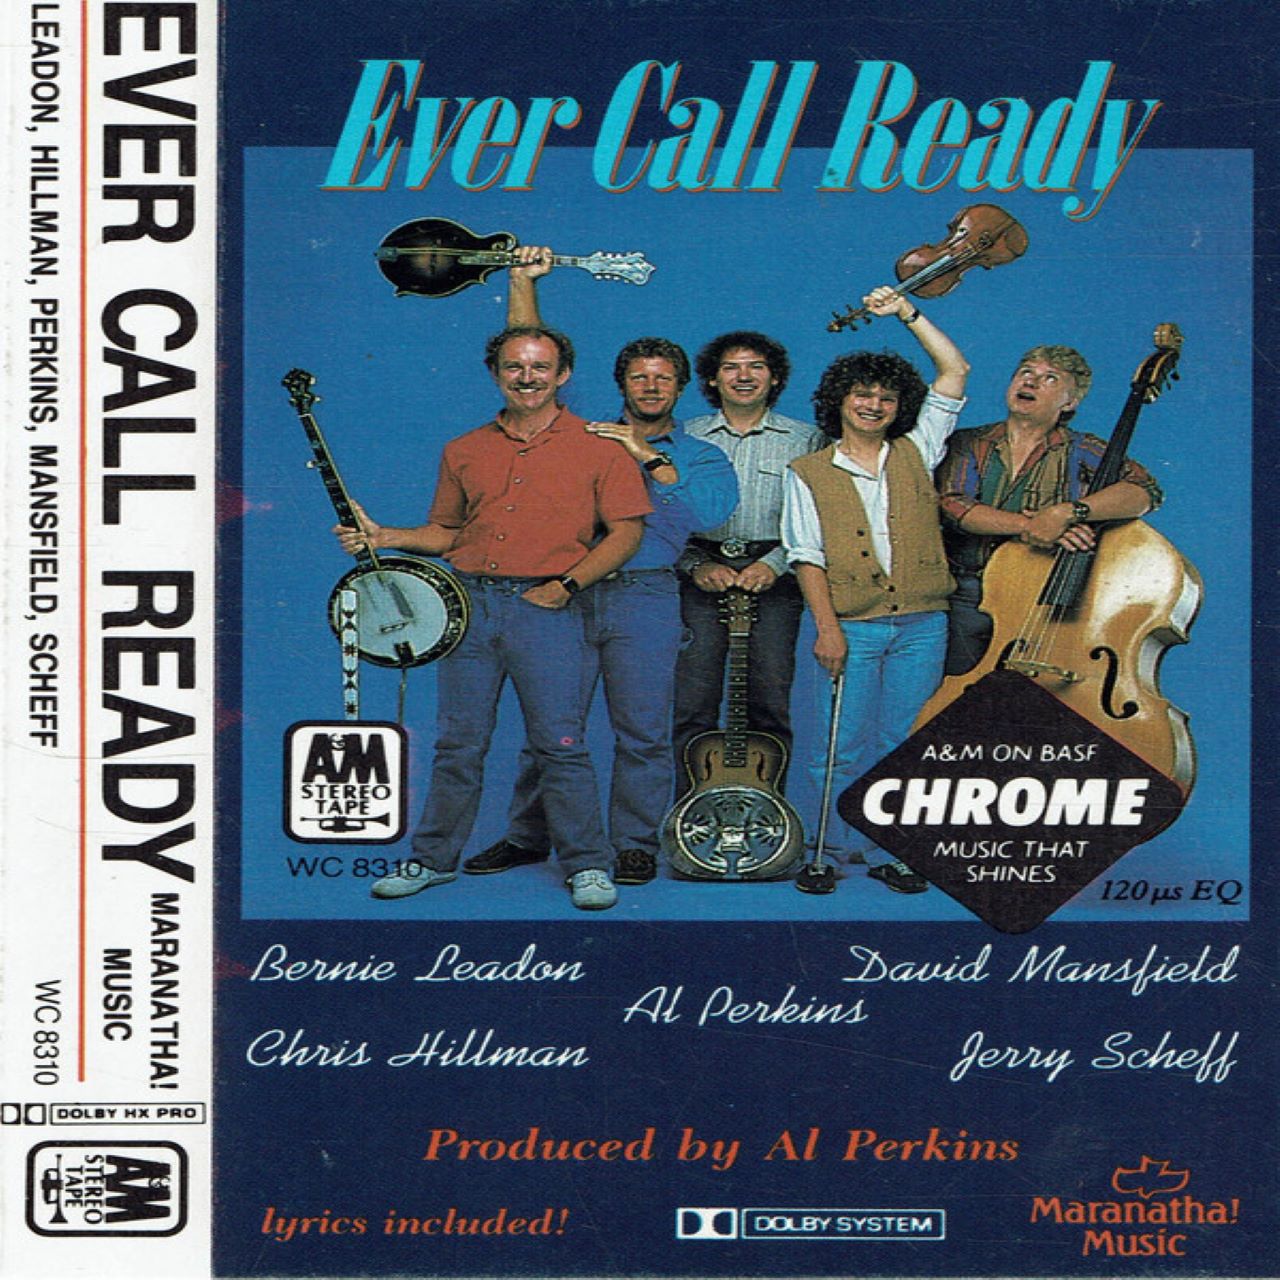 Bernie Leadon, Chris Hillman, Al Perkins, David Mansfield, Jerry Scheff - Ever Call Ready cover album